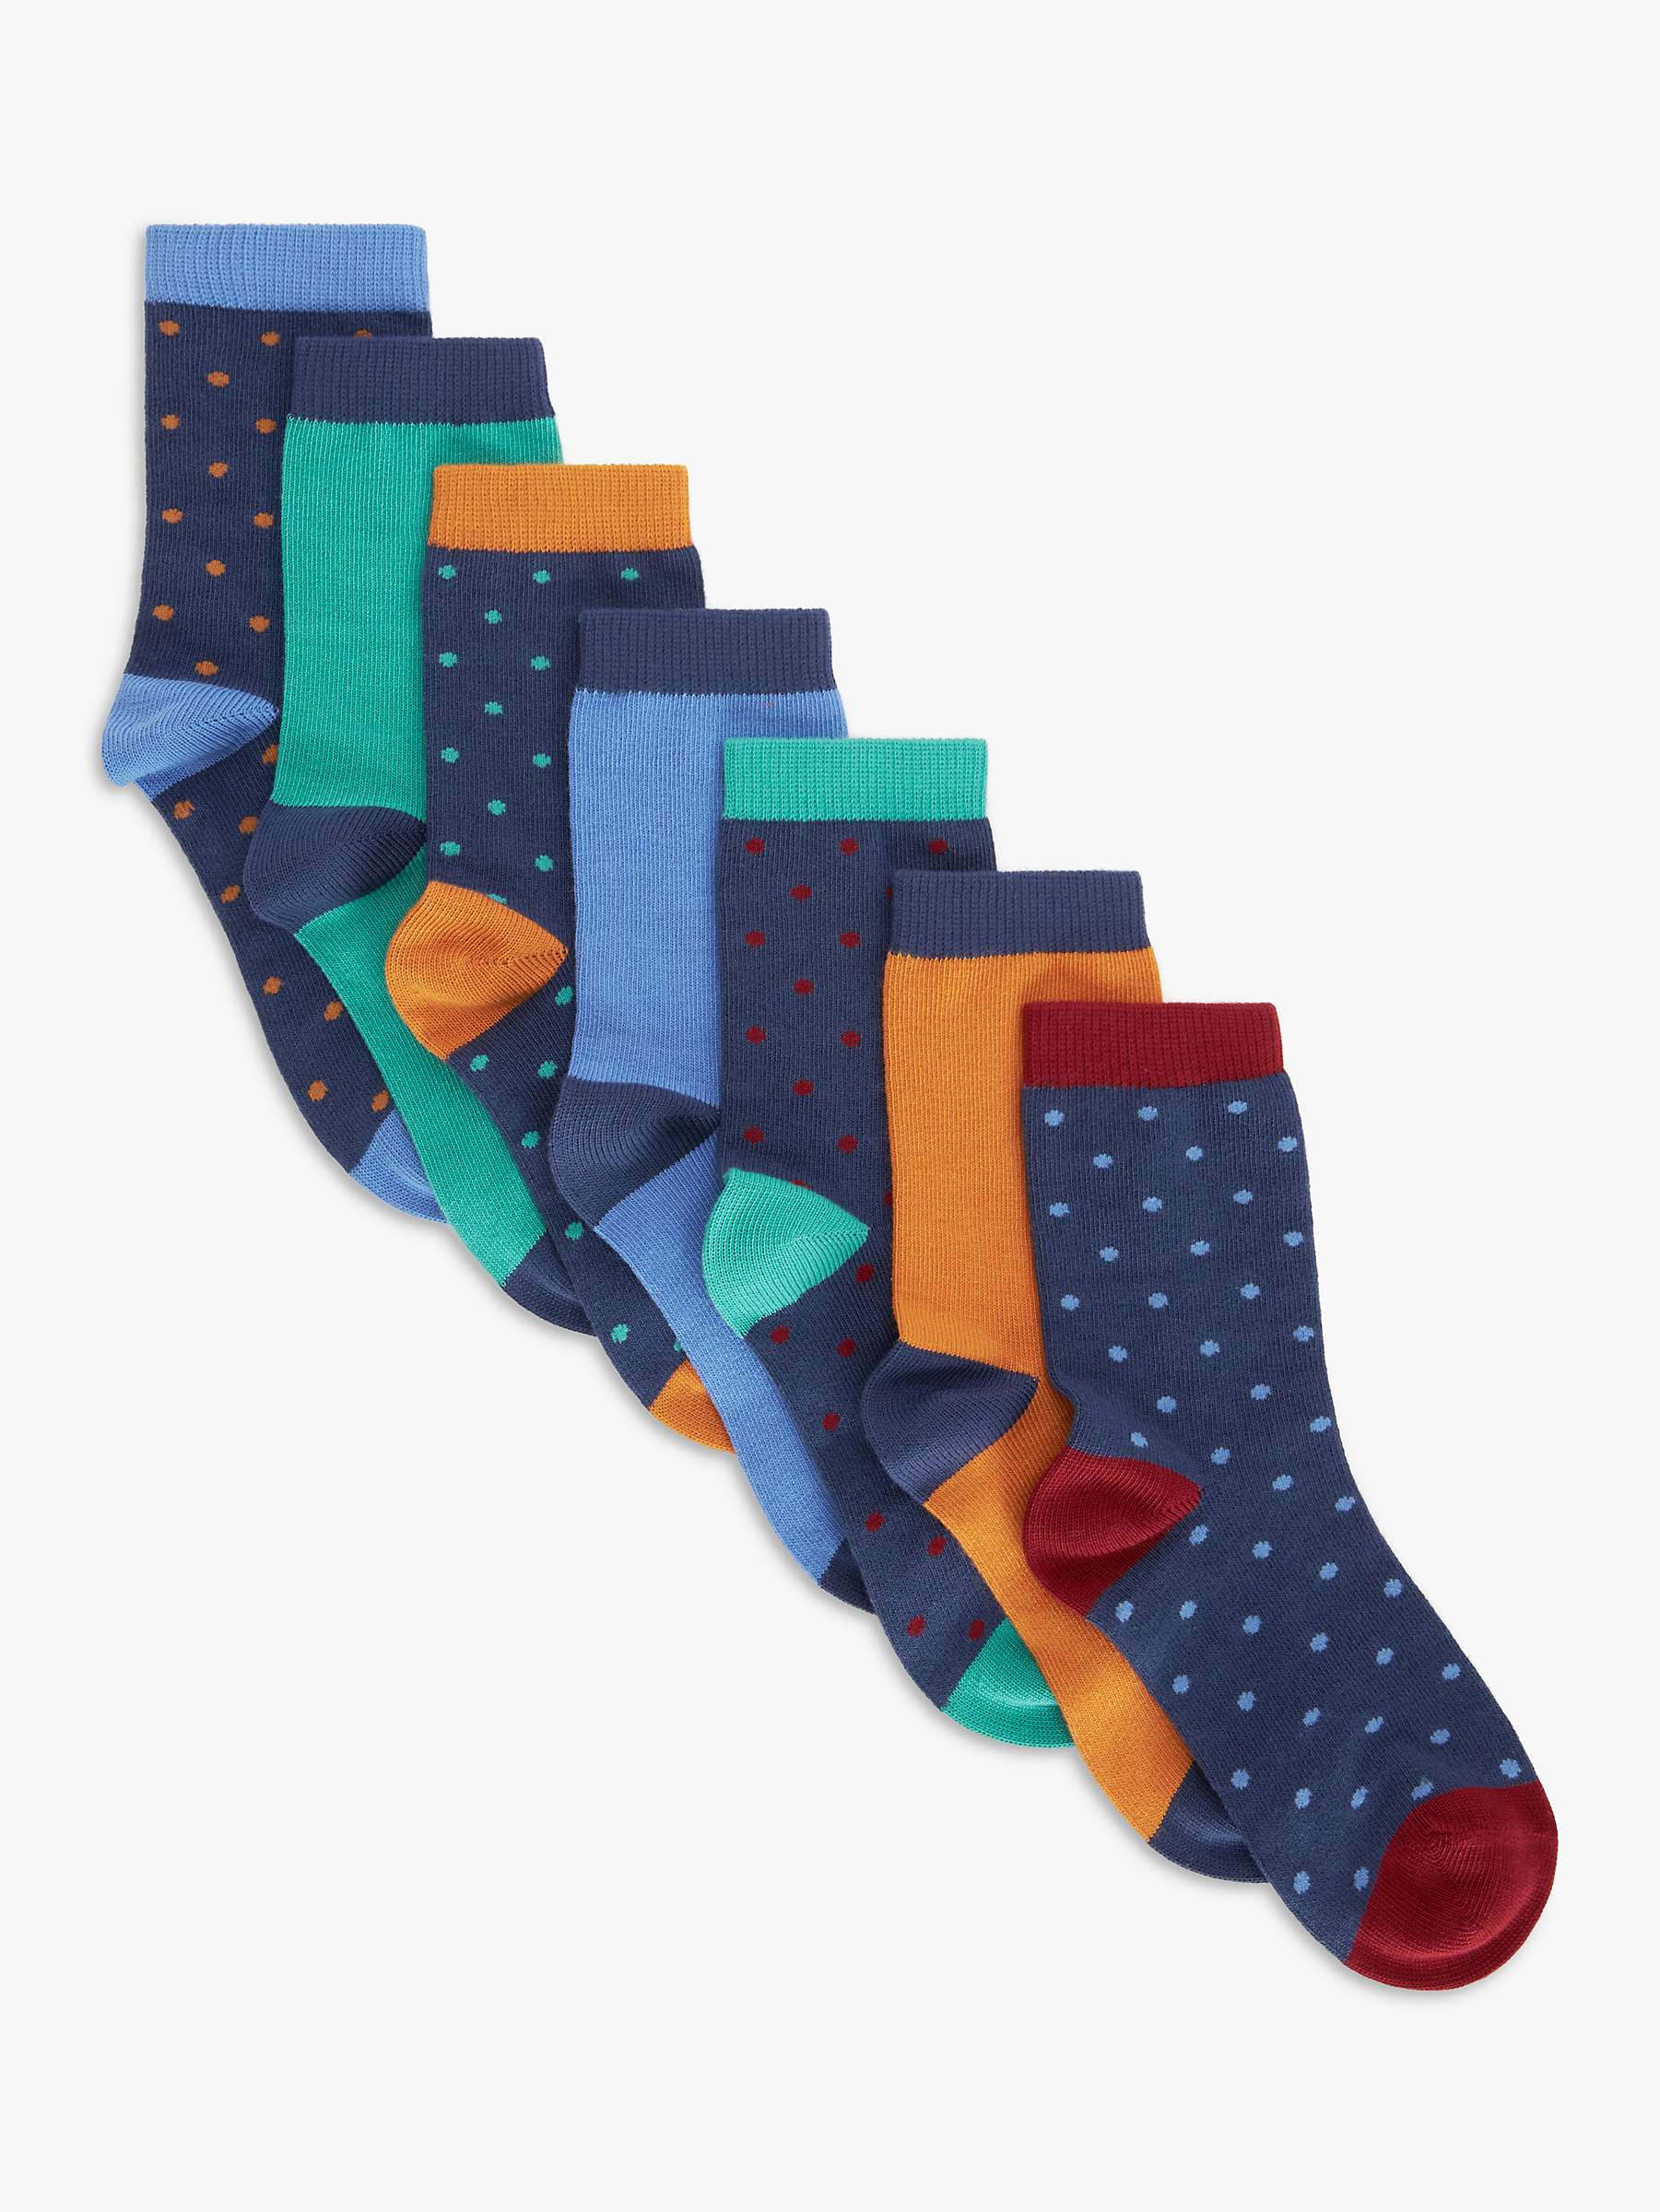 Buy John Lewis Kids' Polka Dot Socks, Pack of 7, Multi Online at johnlewis.com